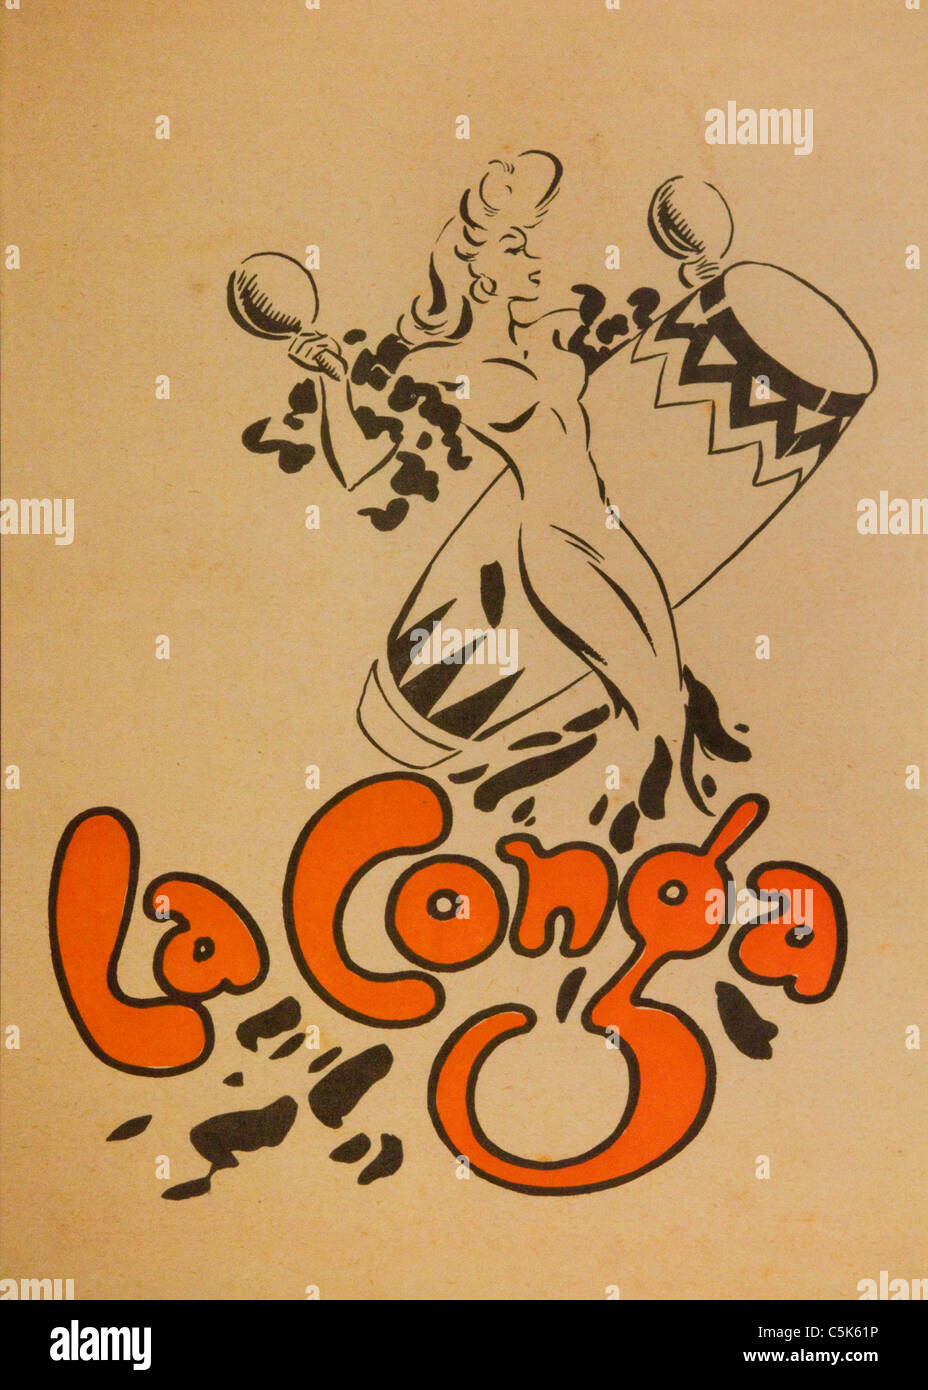 Vintage La Conga poster Stock Photo